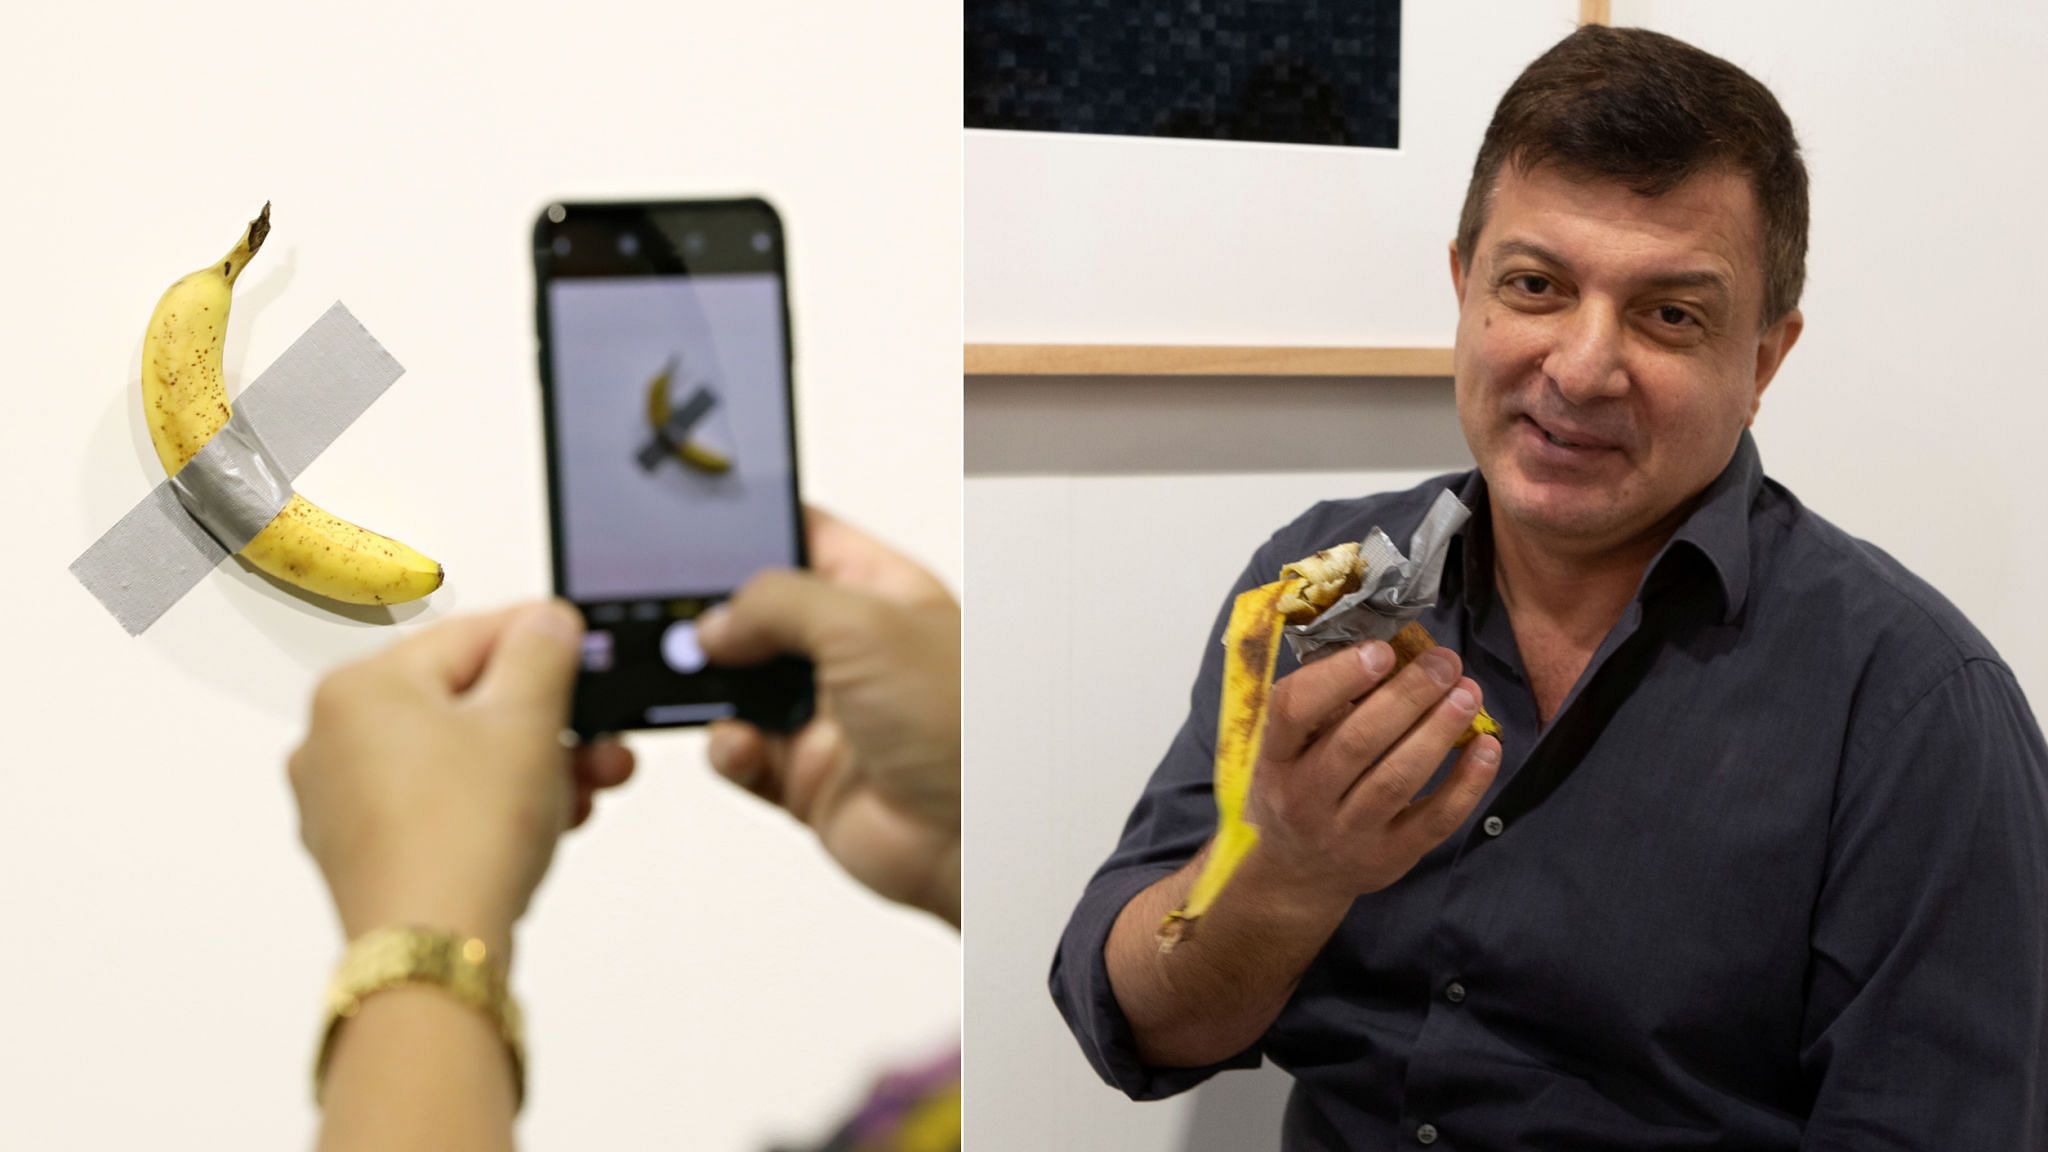 hungry artist david ate banana worth 86 lakhs